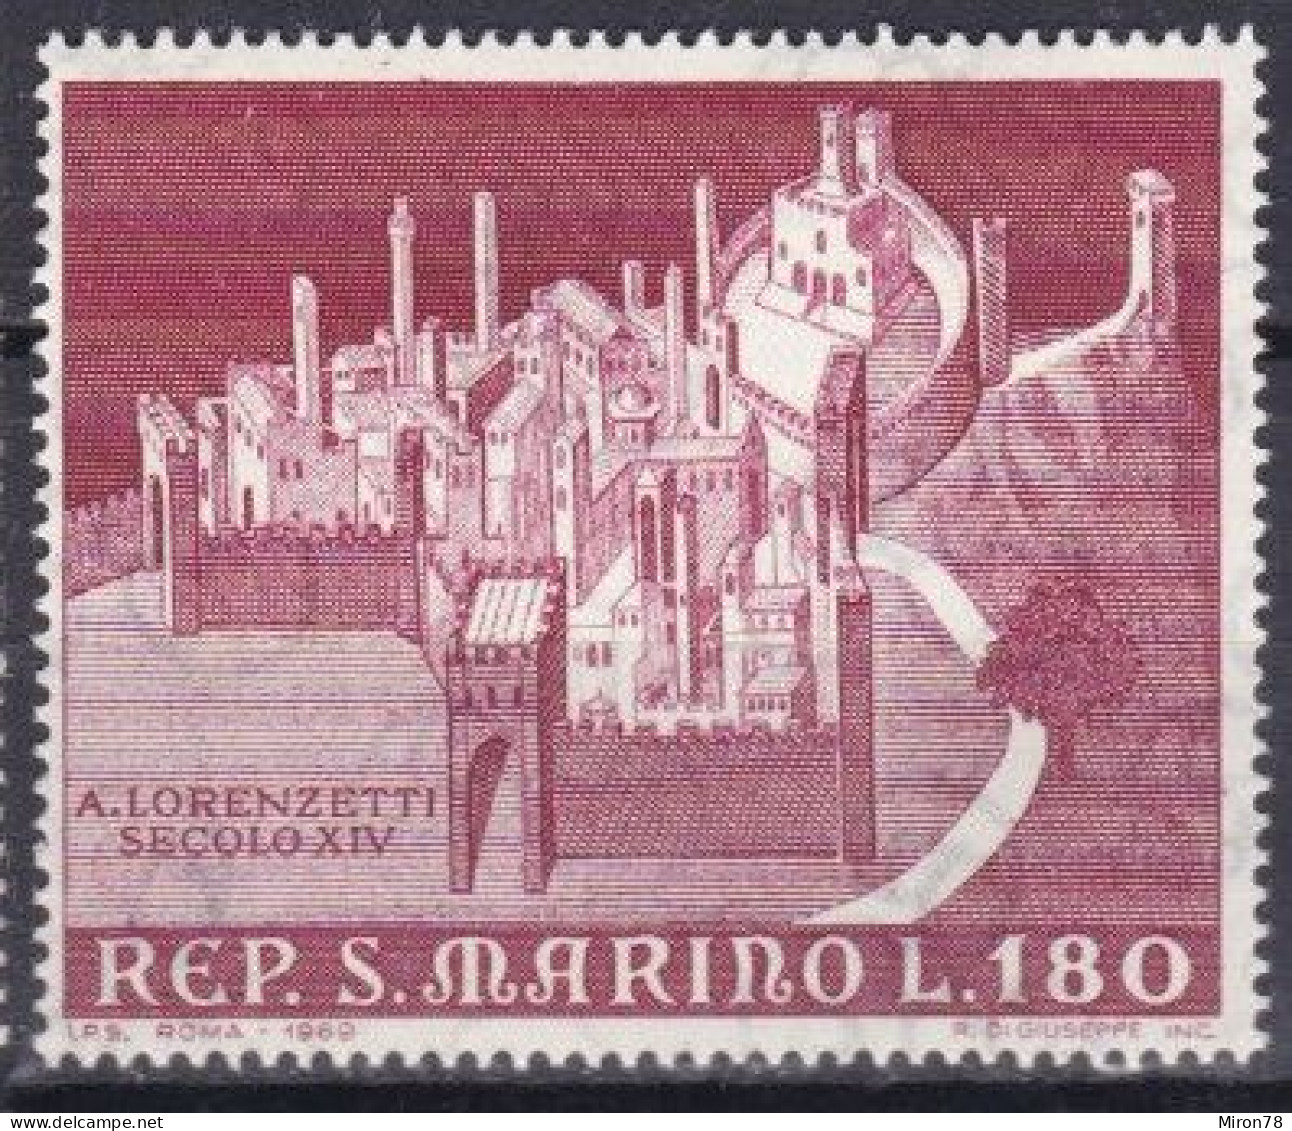 Stamps SAN MARINO MNH Lot58 - Unused Stamps